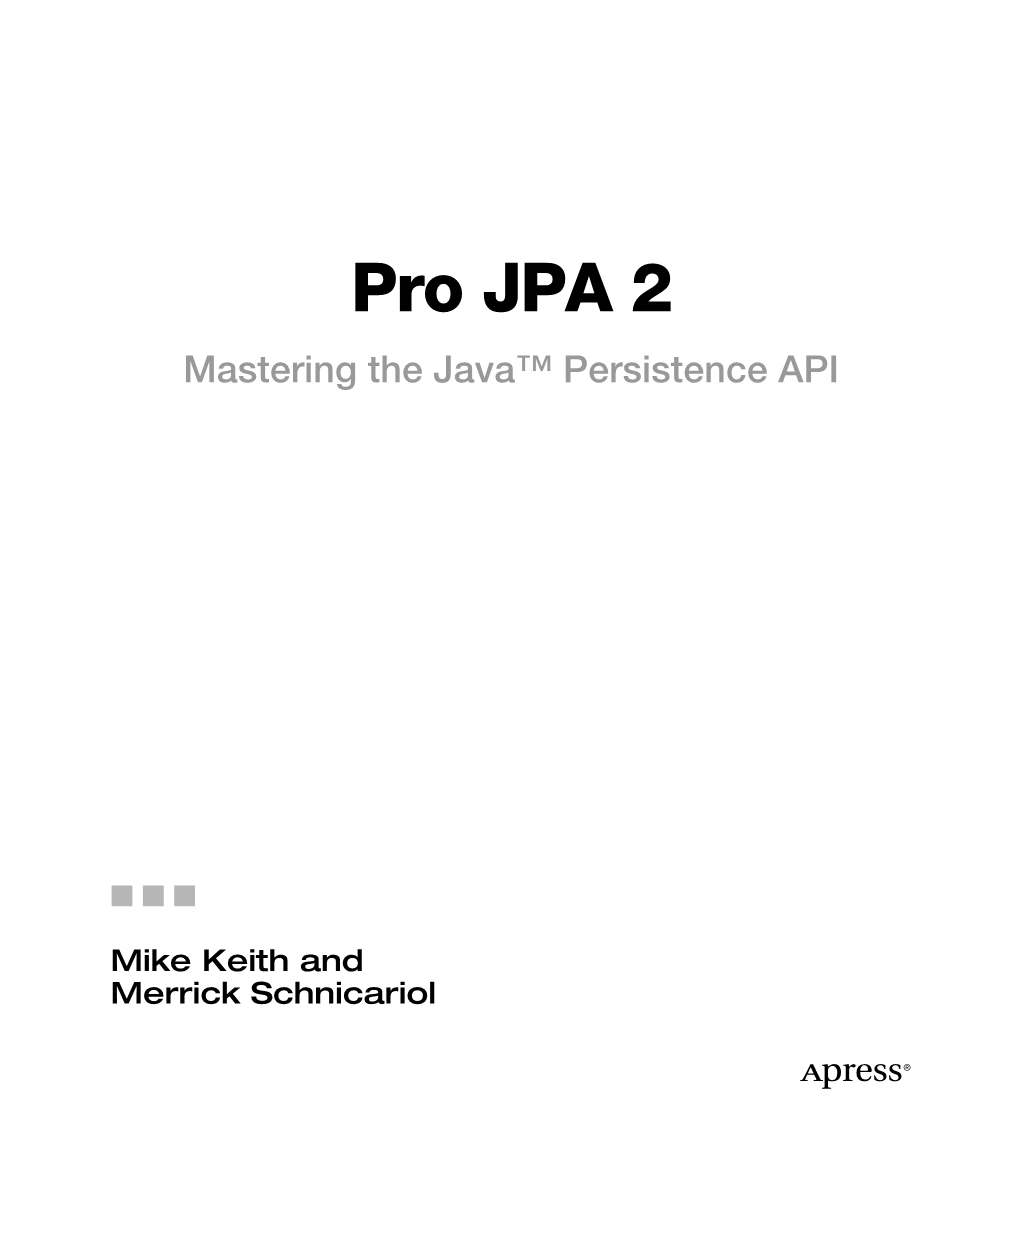 Pro JPA 2 Mastering the Java™ Persistence API